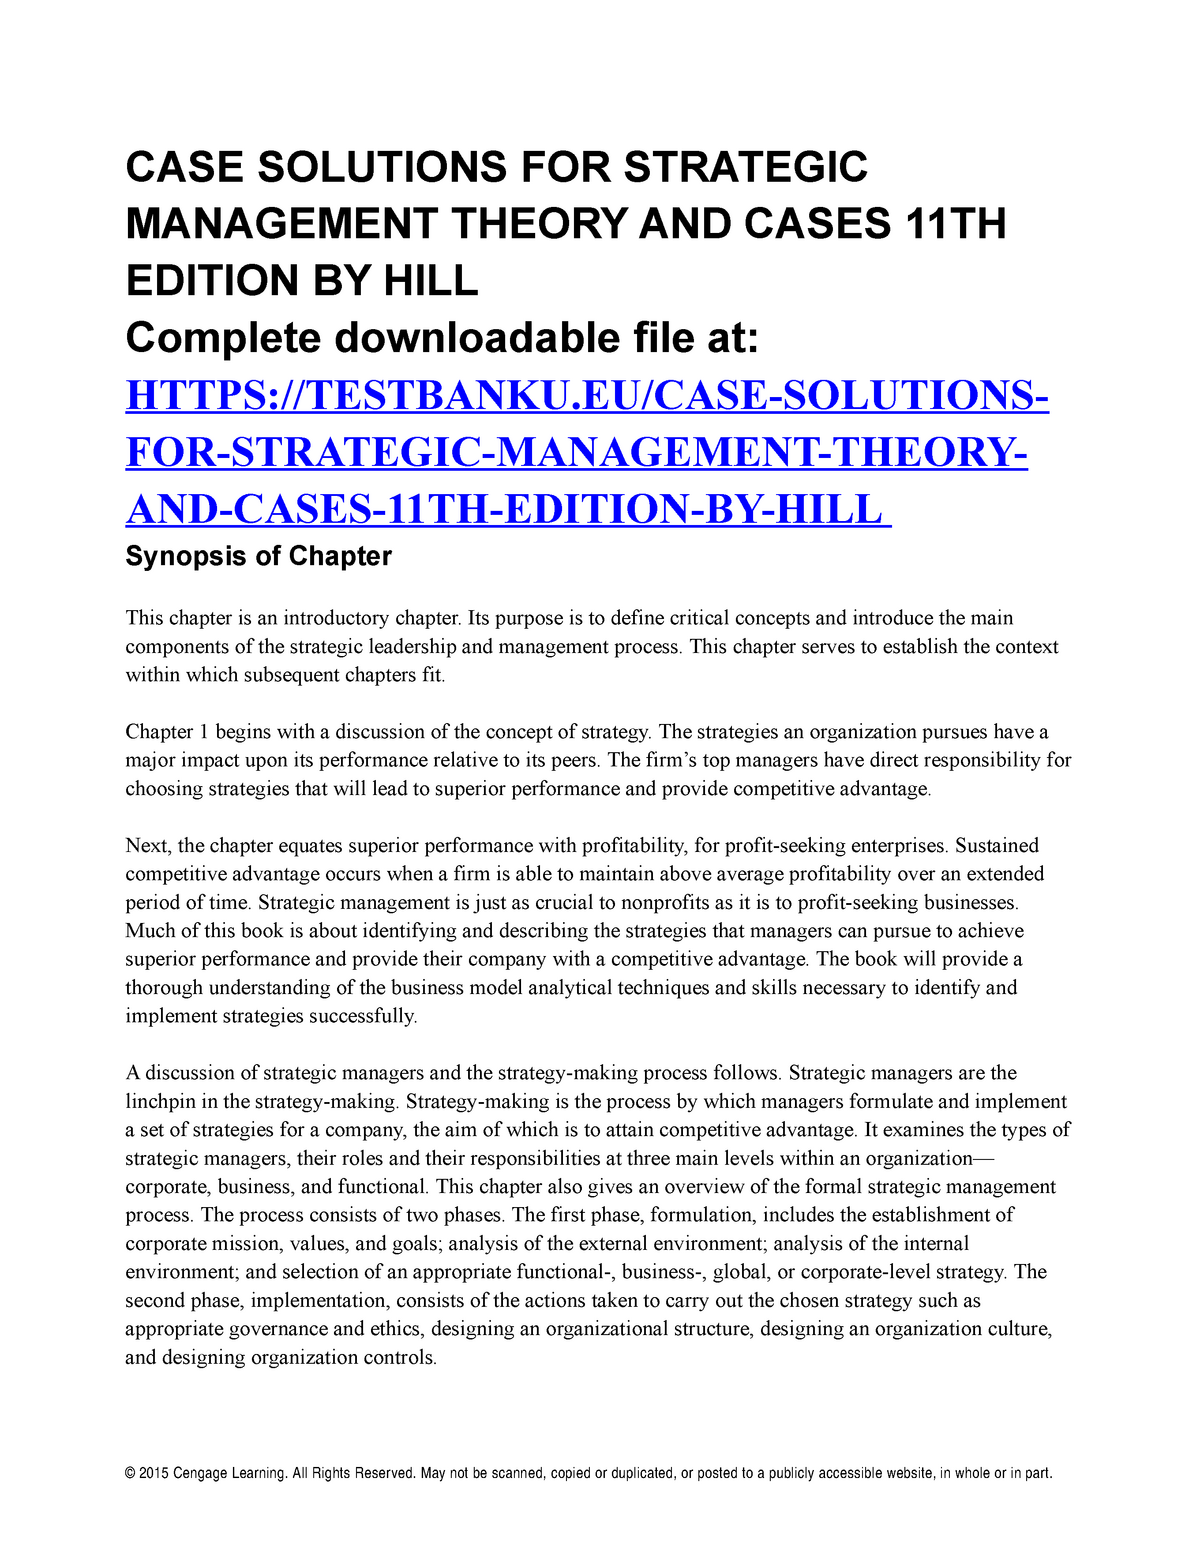 strategic management case study manufacturing